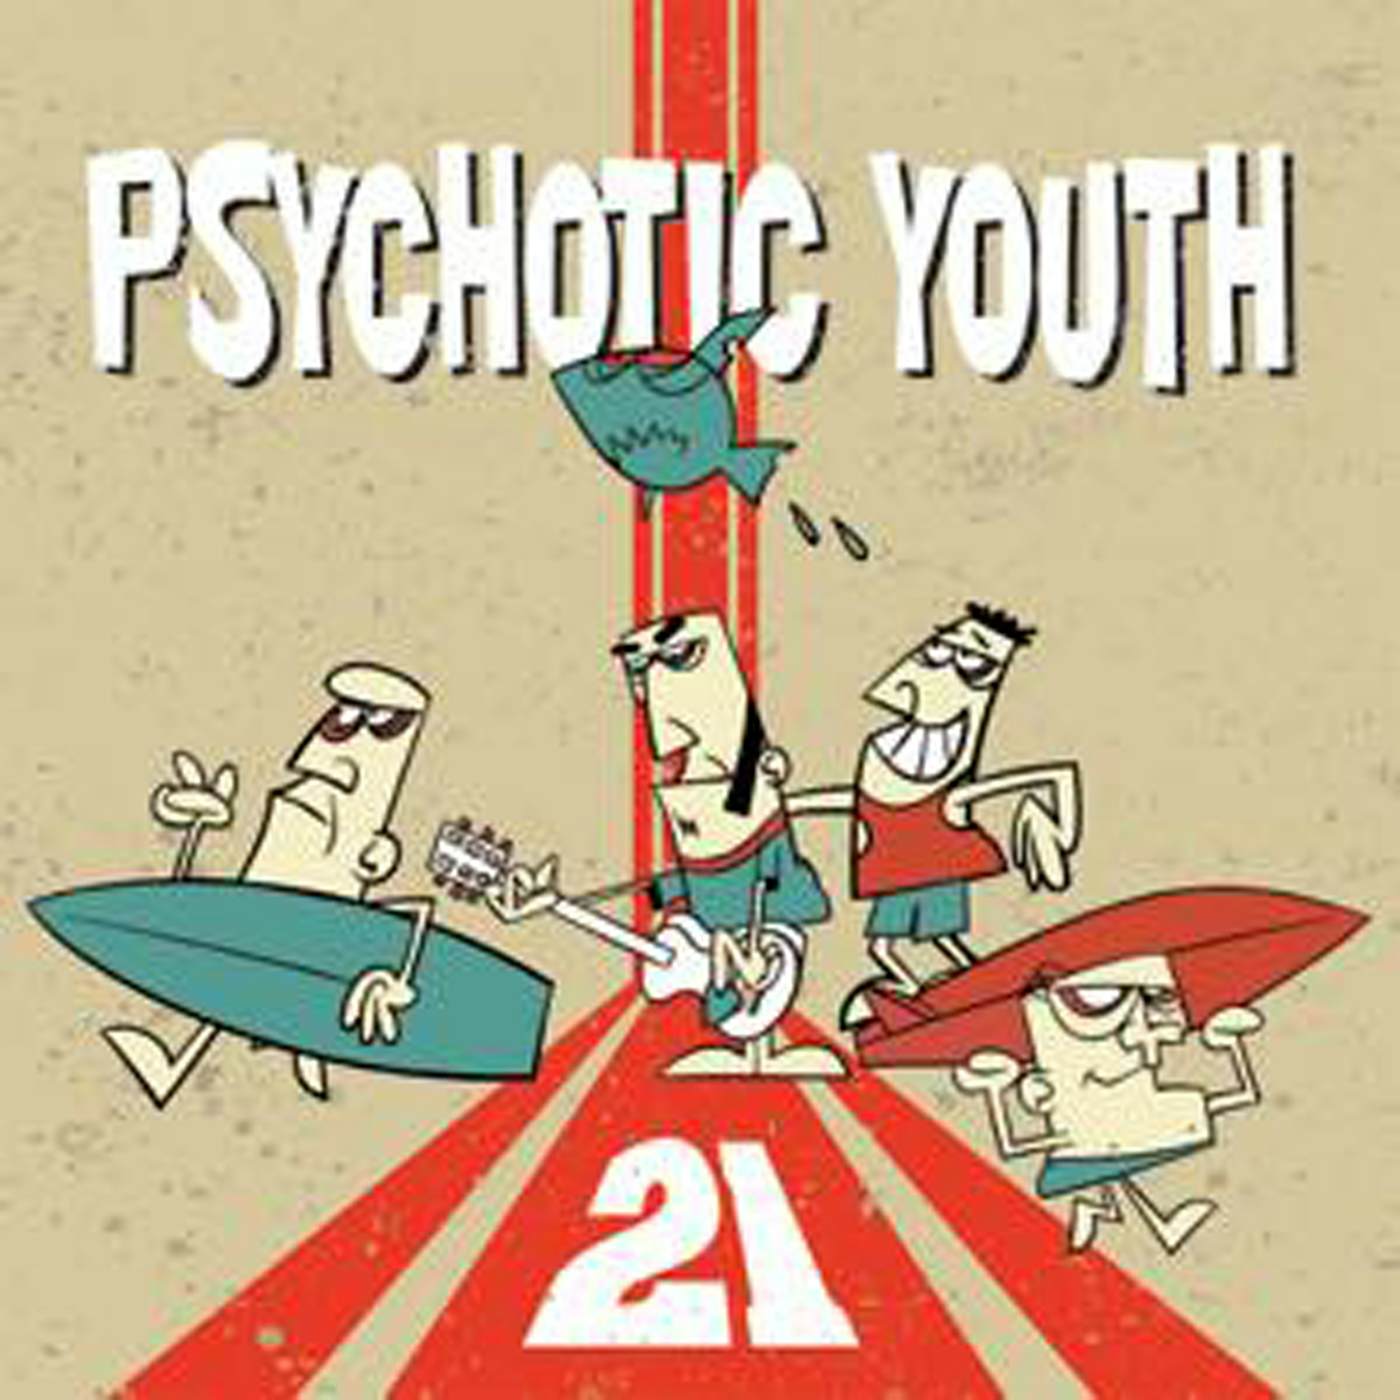 Psychotic Youth 21 CD